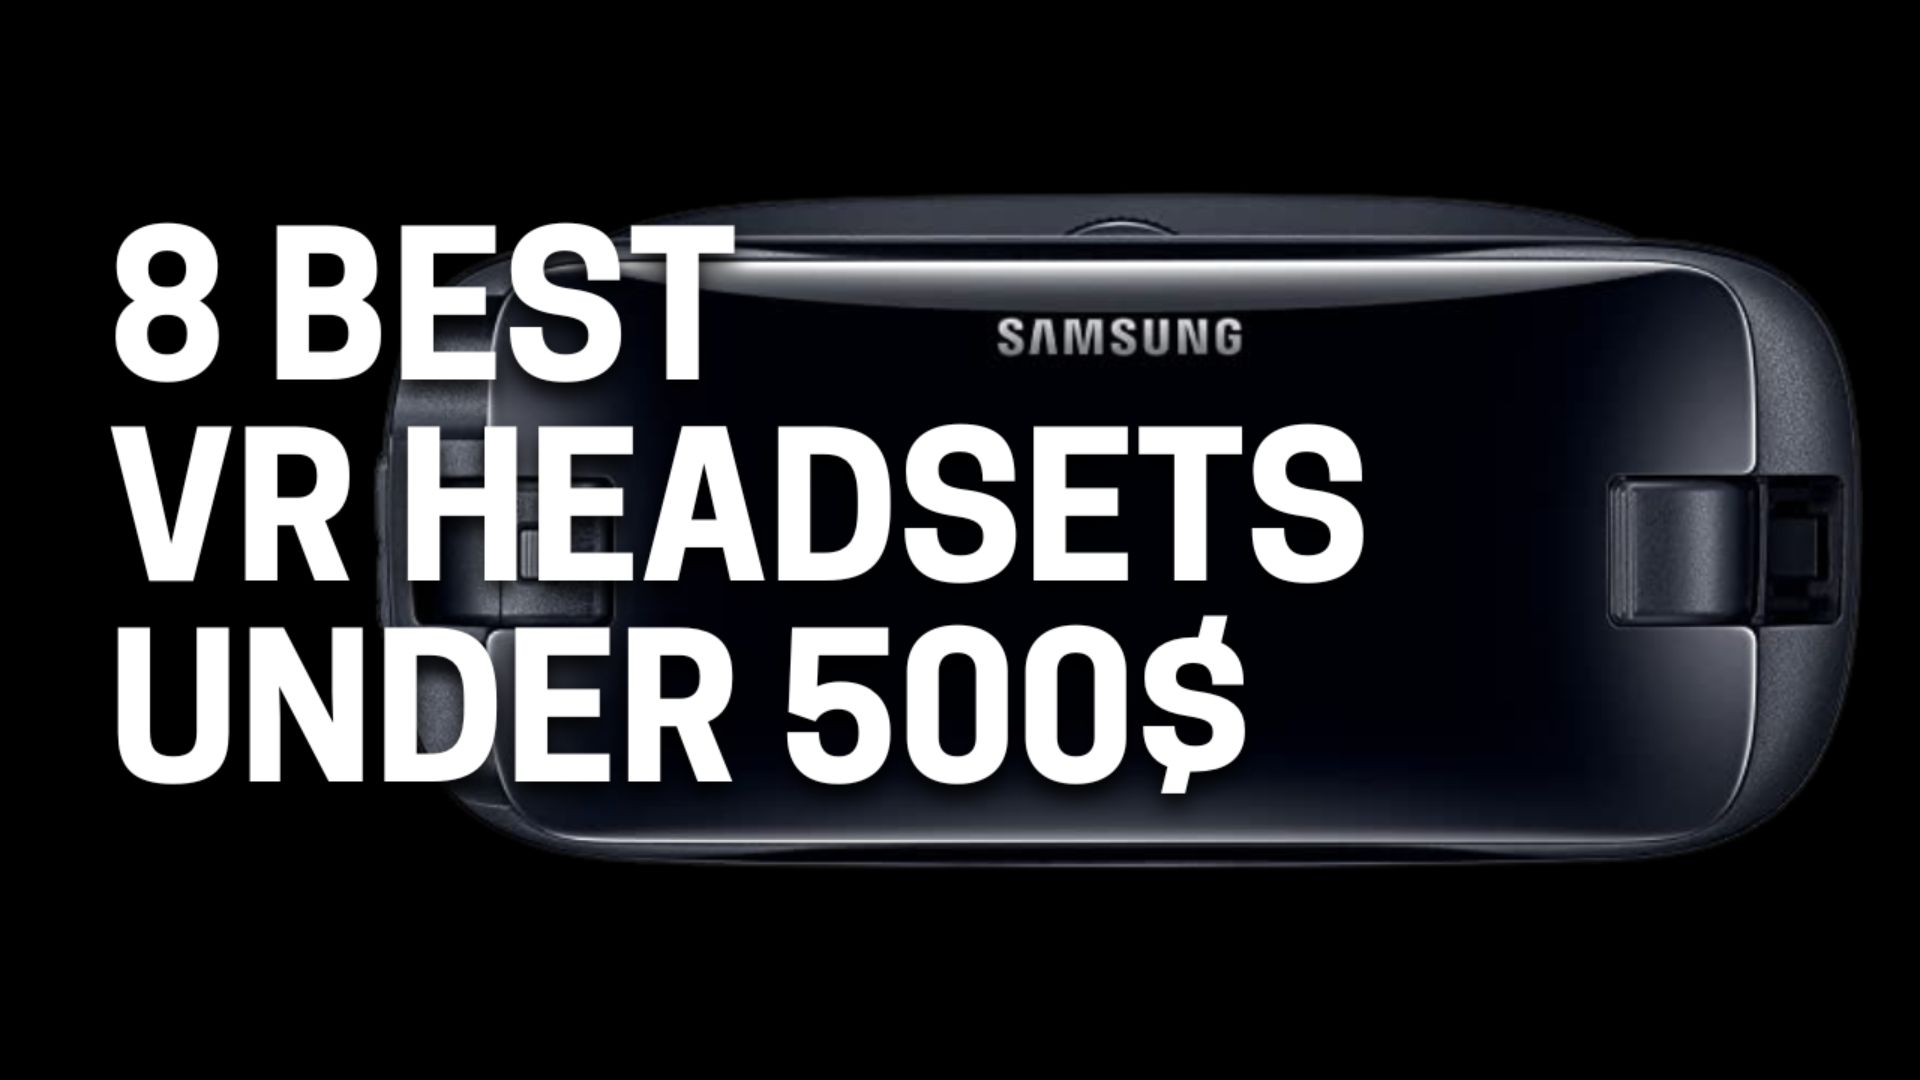 8 Best VR Headsets Under 500$